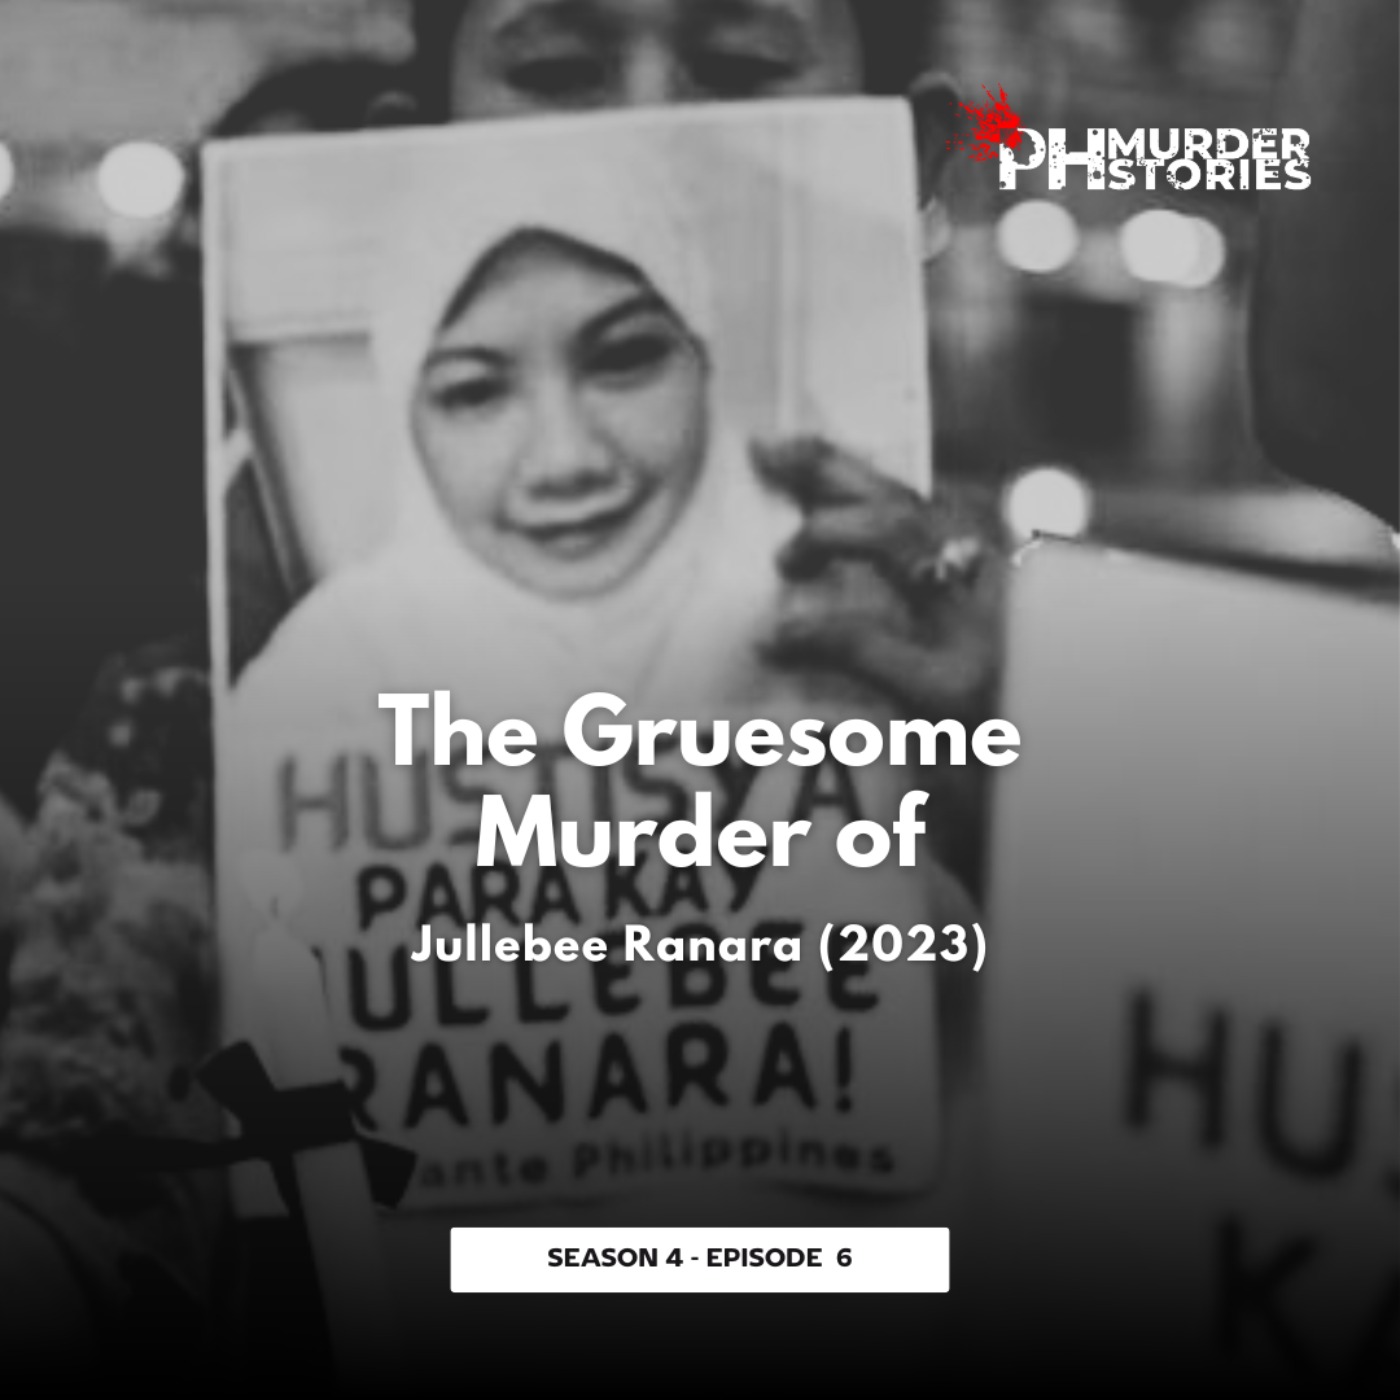 cover art for The Gruesome Murder of Jullebee Ranara in Kuwait (2023)